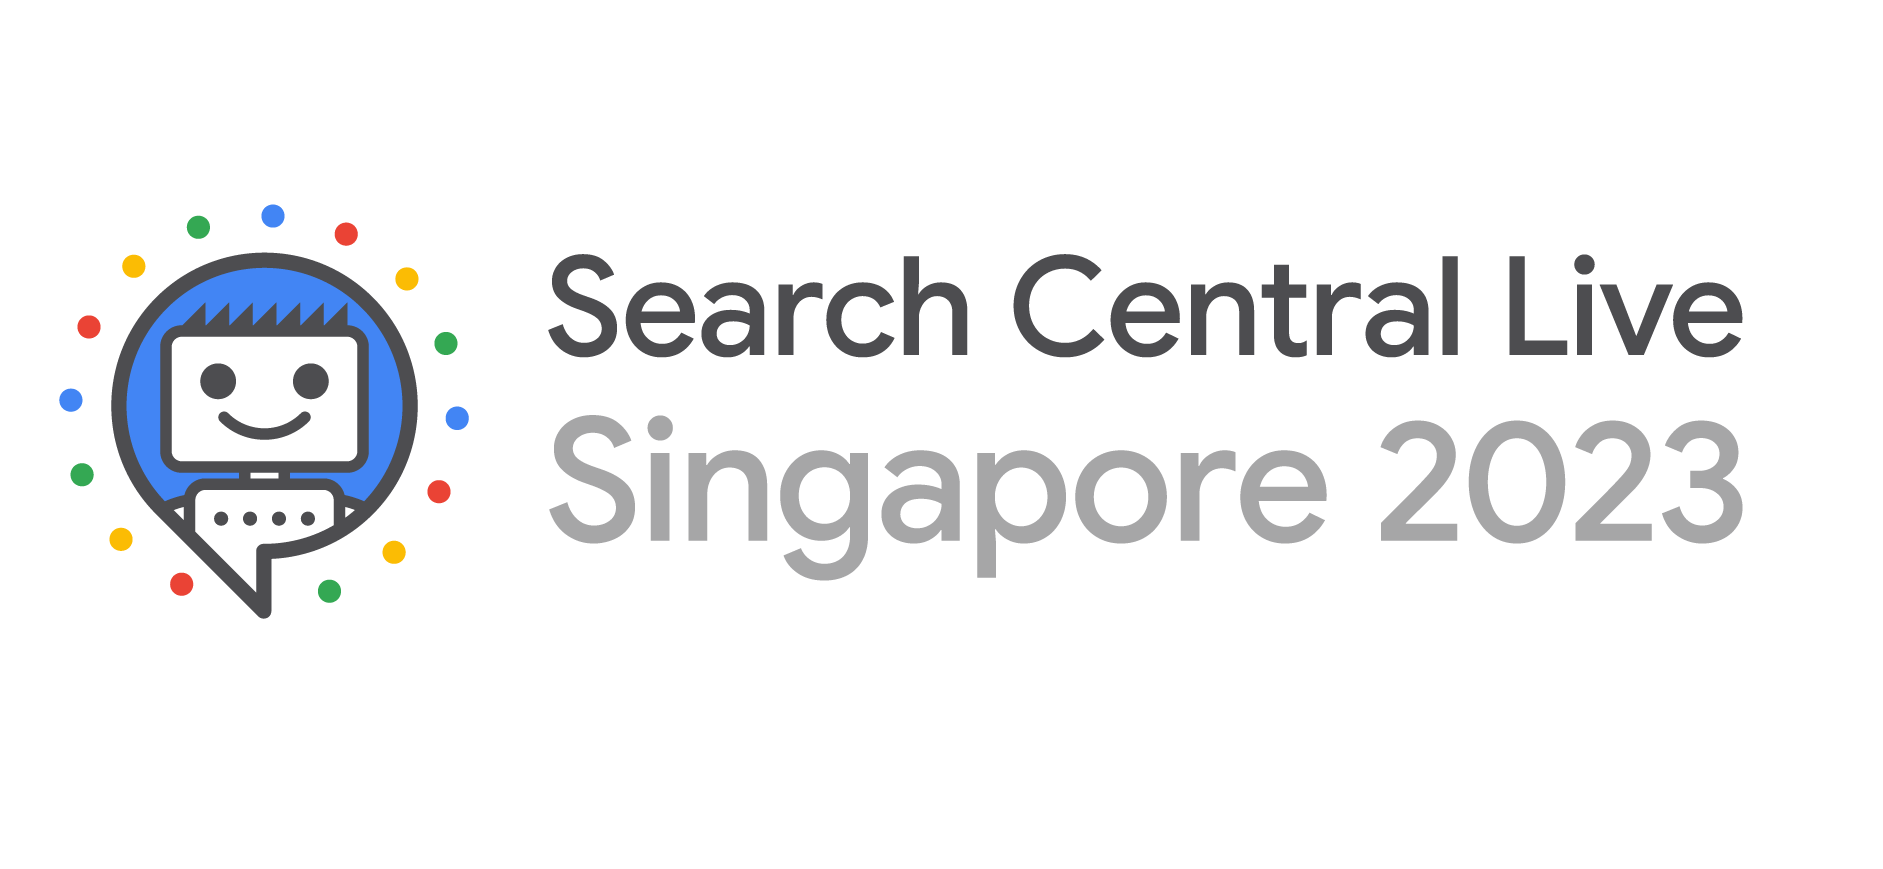 Логотип мероприятия Search Central Live 2023 г. в Сингапуре